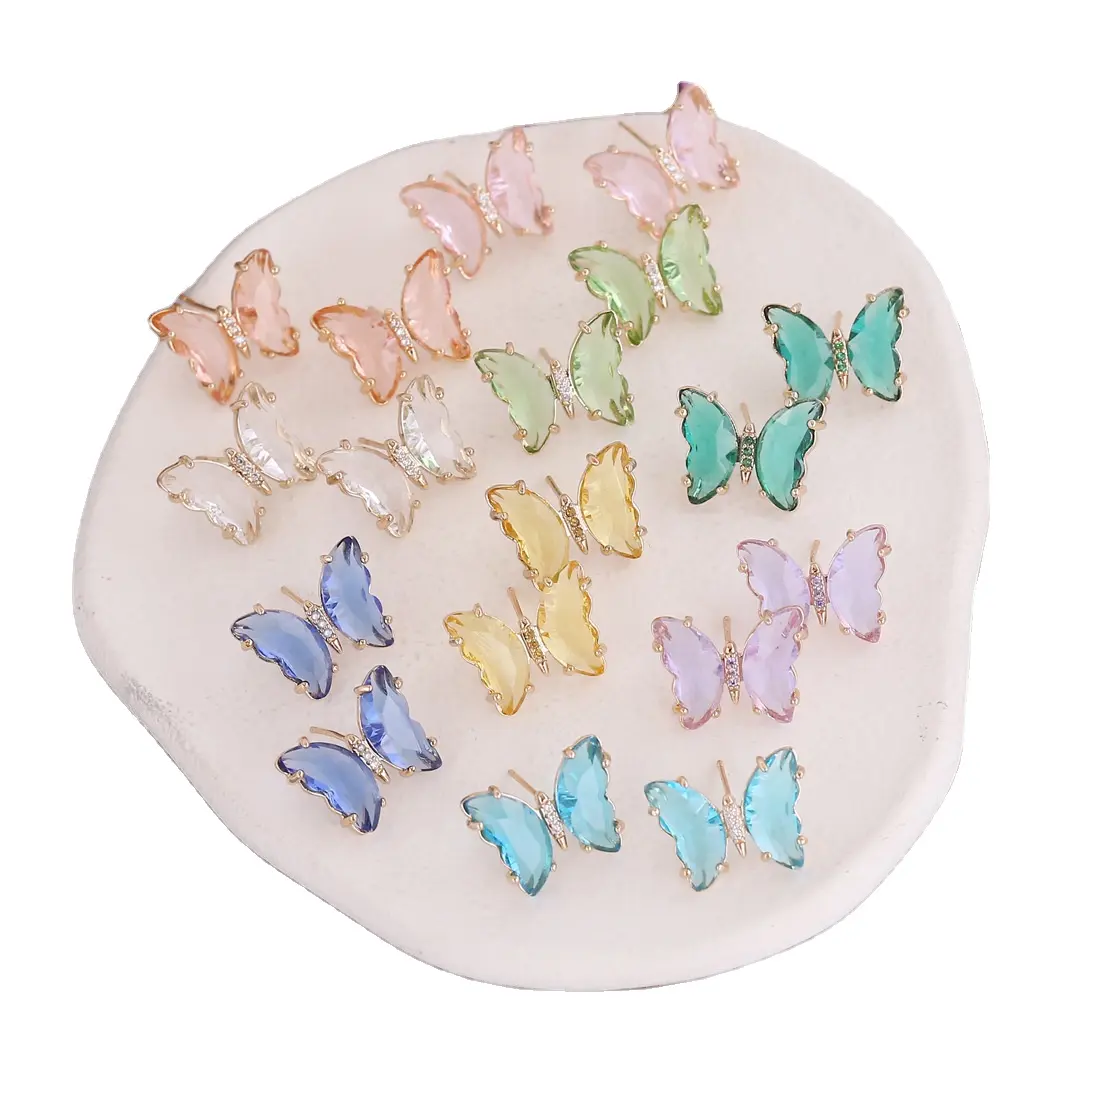 Atacado de brincos de borboleta coloridos com zircônias incrustadas de diamantes multicoloridas, joias femininas criativas e charmosas